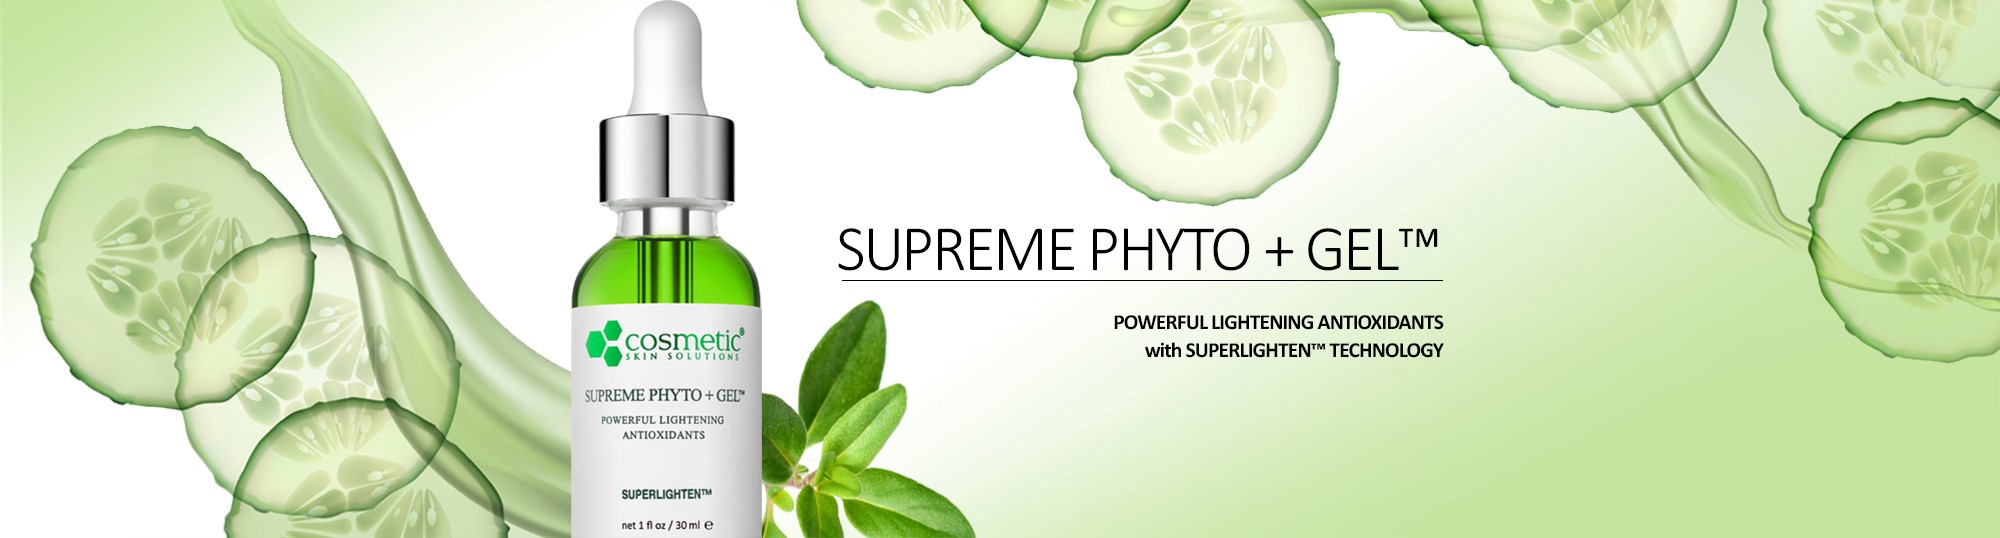 Supreme Phyto + Gel™ - Powerful Lightening Antioxidants with Superlighten™ Technology